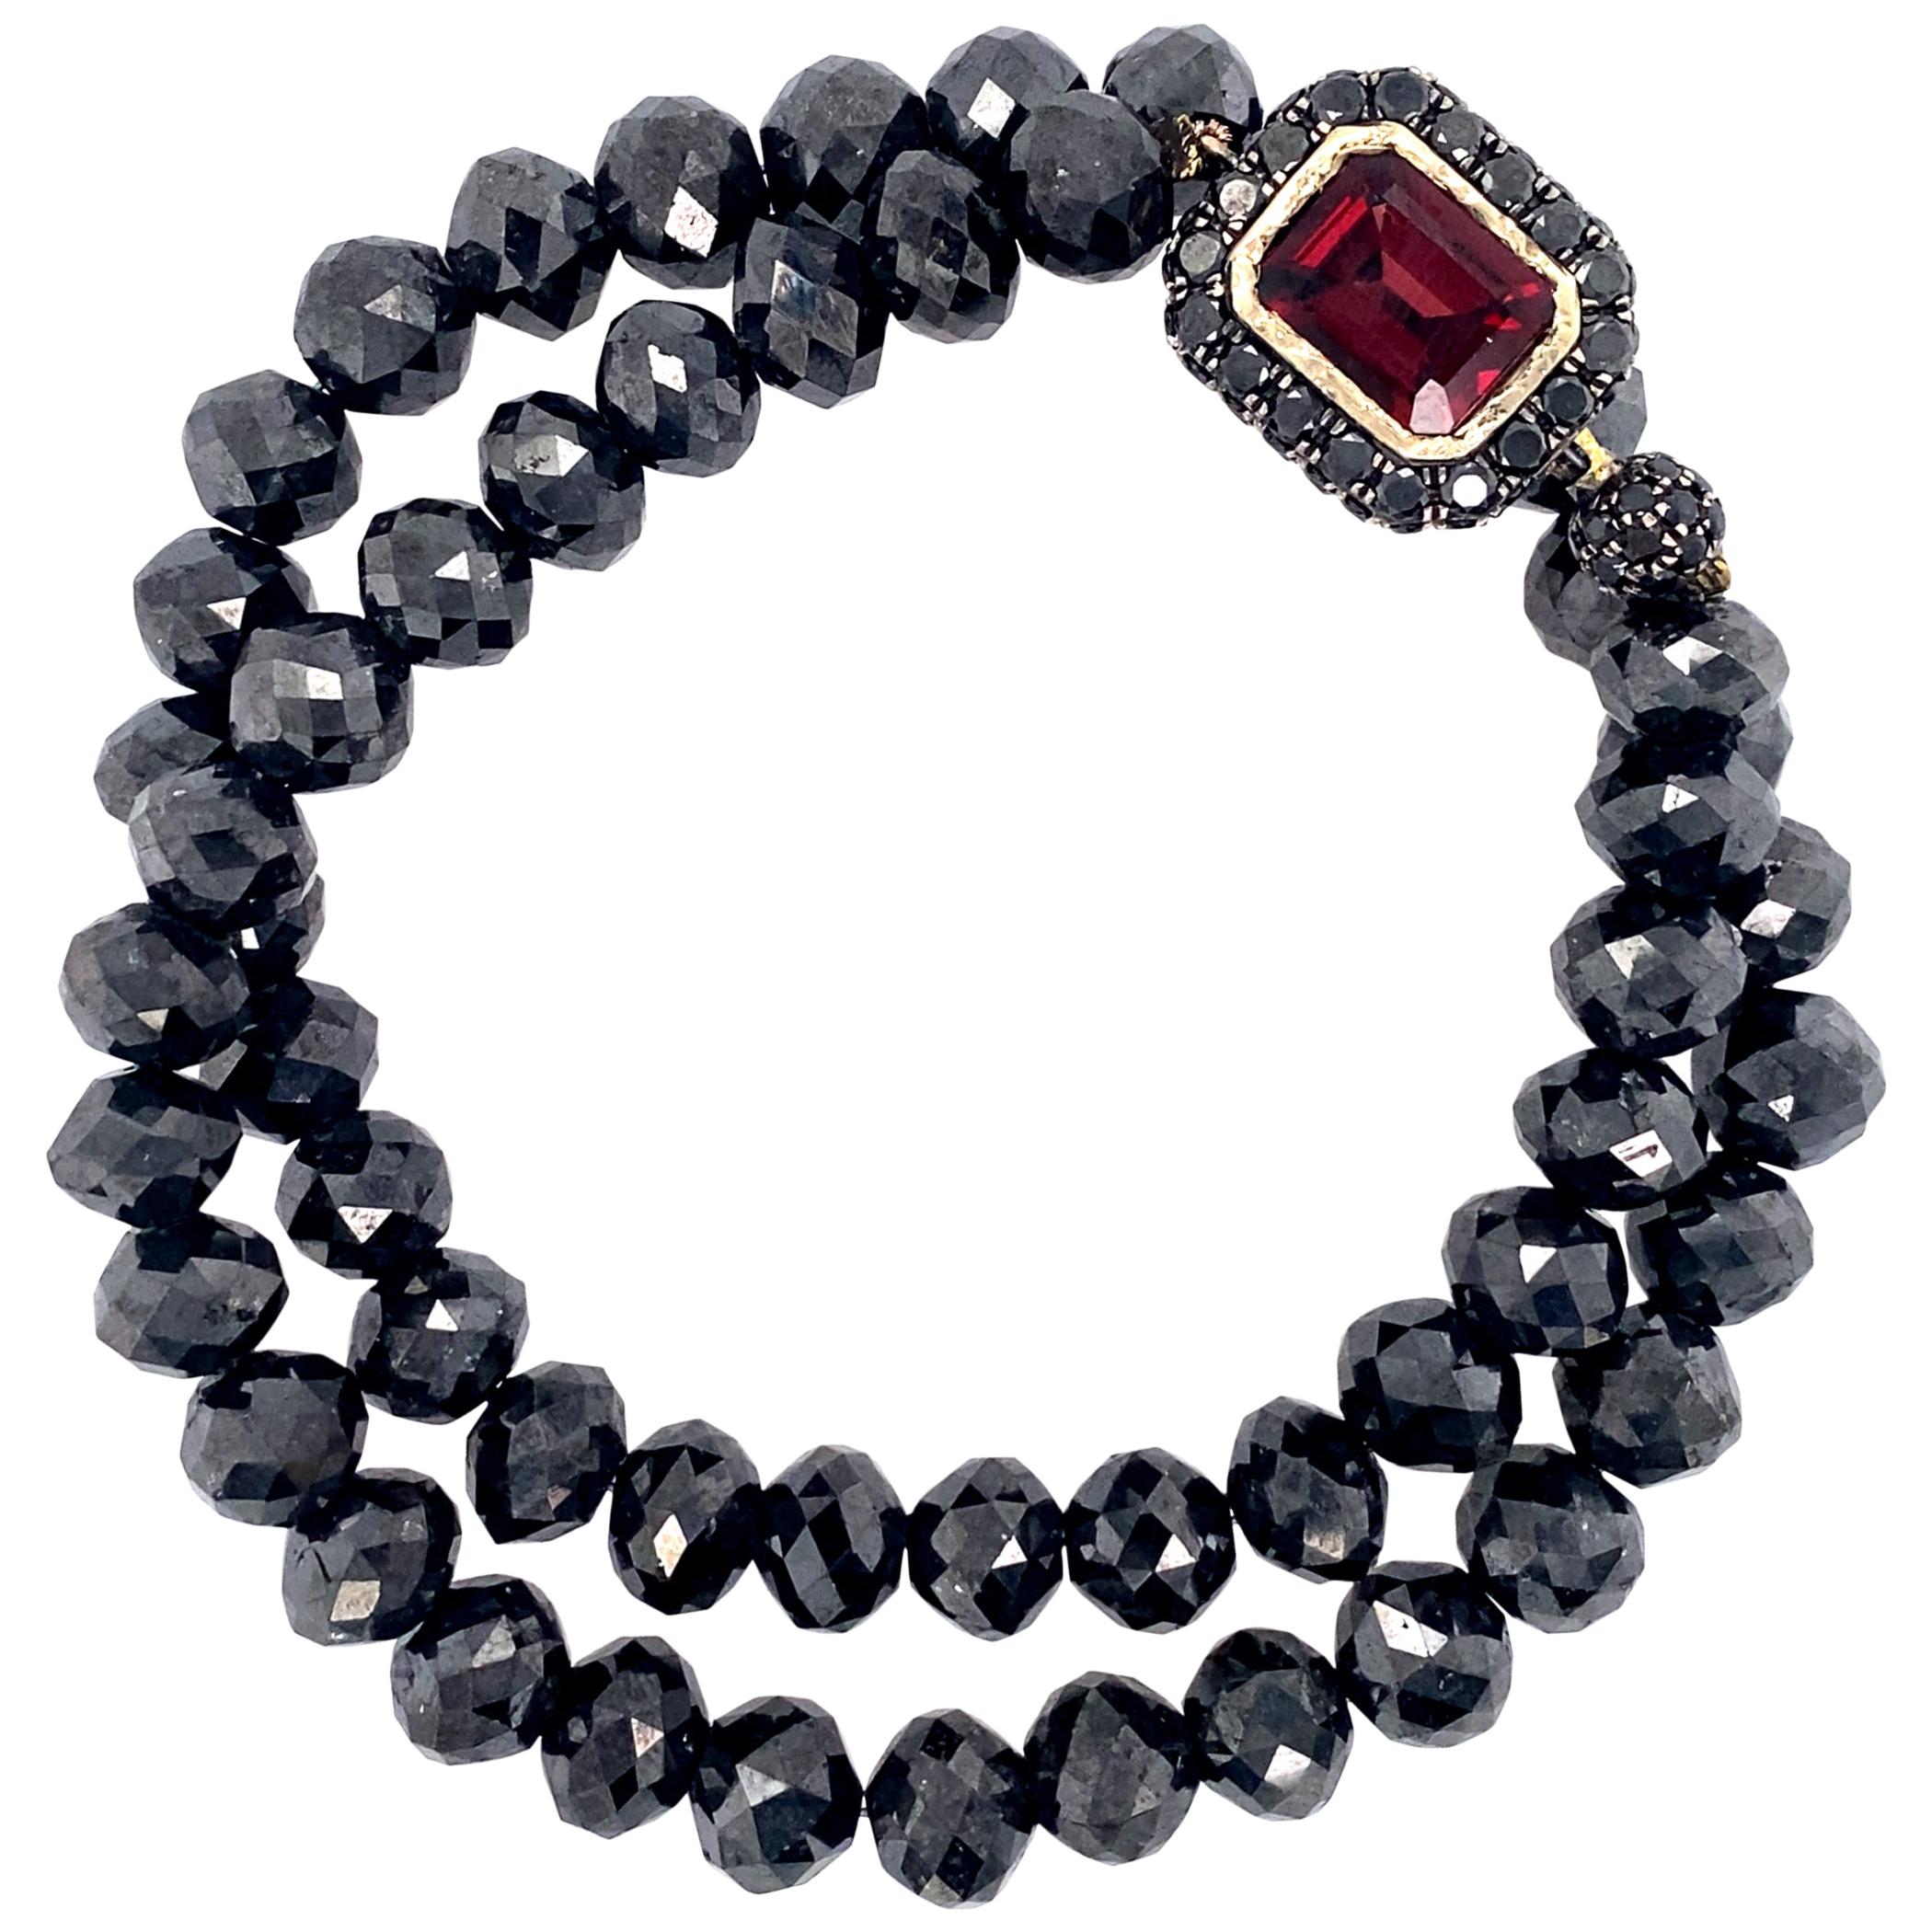 250 Carat Black Diamond Bead Choker Necklace with Garnet Clasp in 18 Karat Gold For Sale